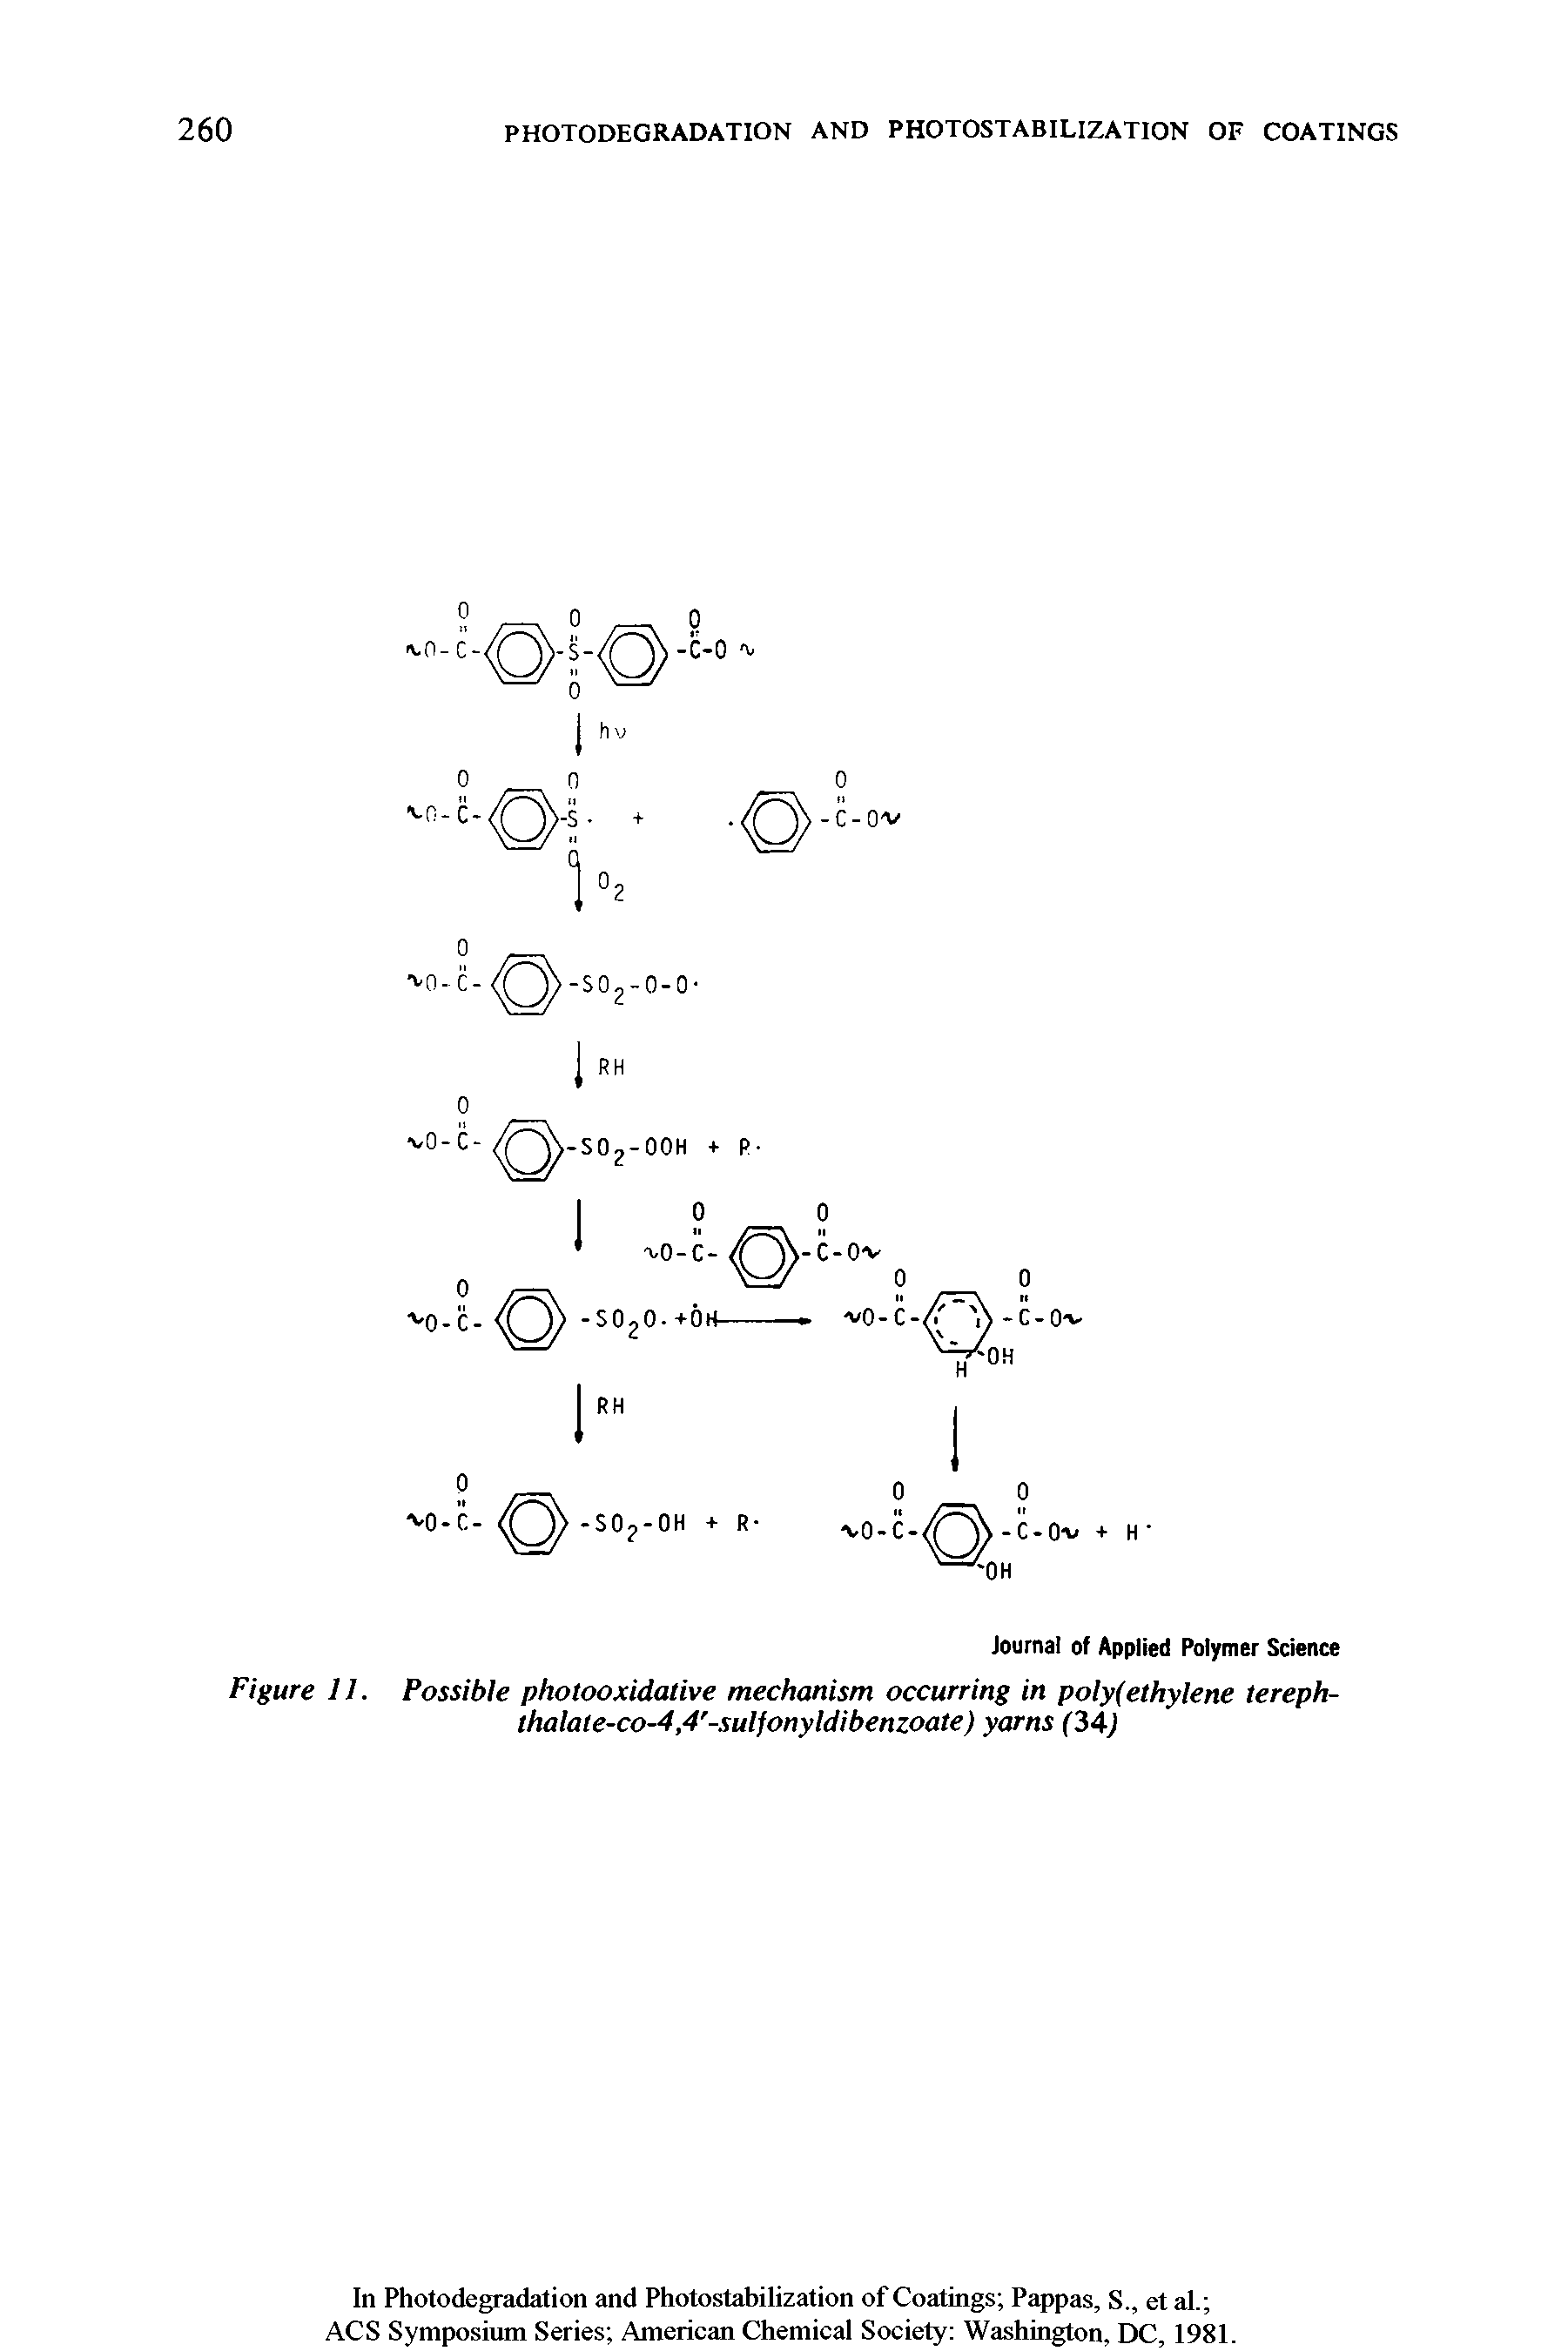 Figure 11. Possible photooxidative mechanism occurring in polyfethylene tereph-thalale-co-4,4 -sulfonyldibenzoate) yarns (34)...